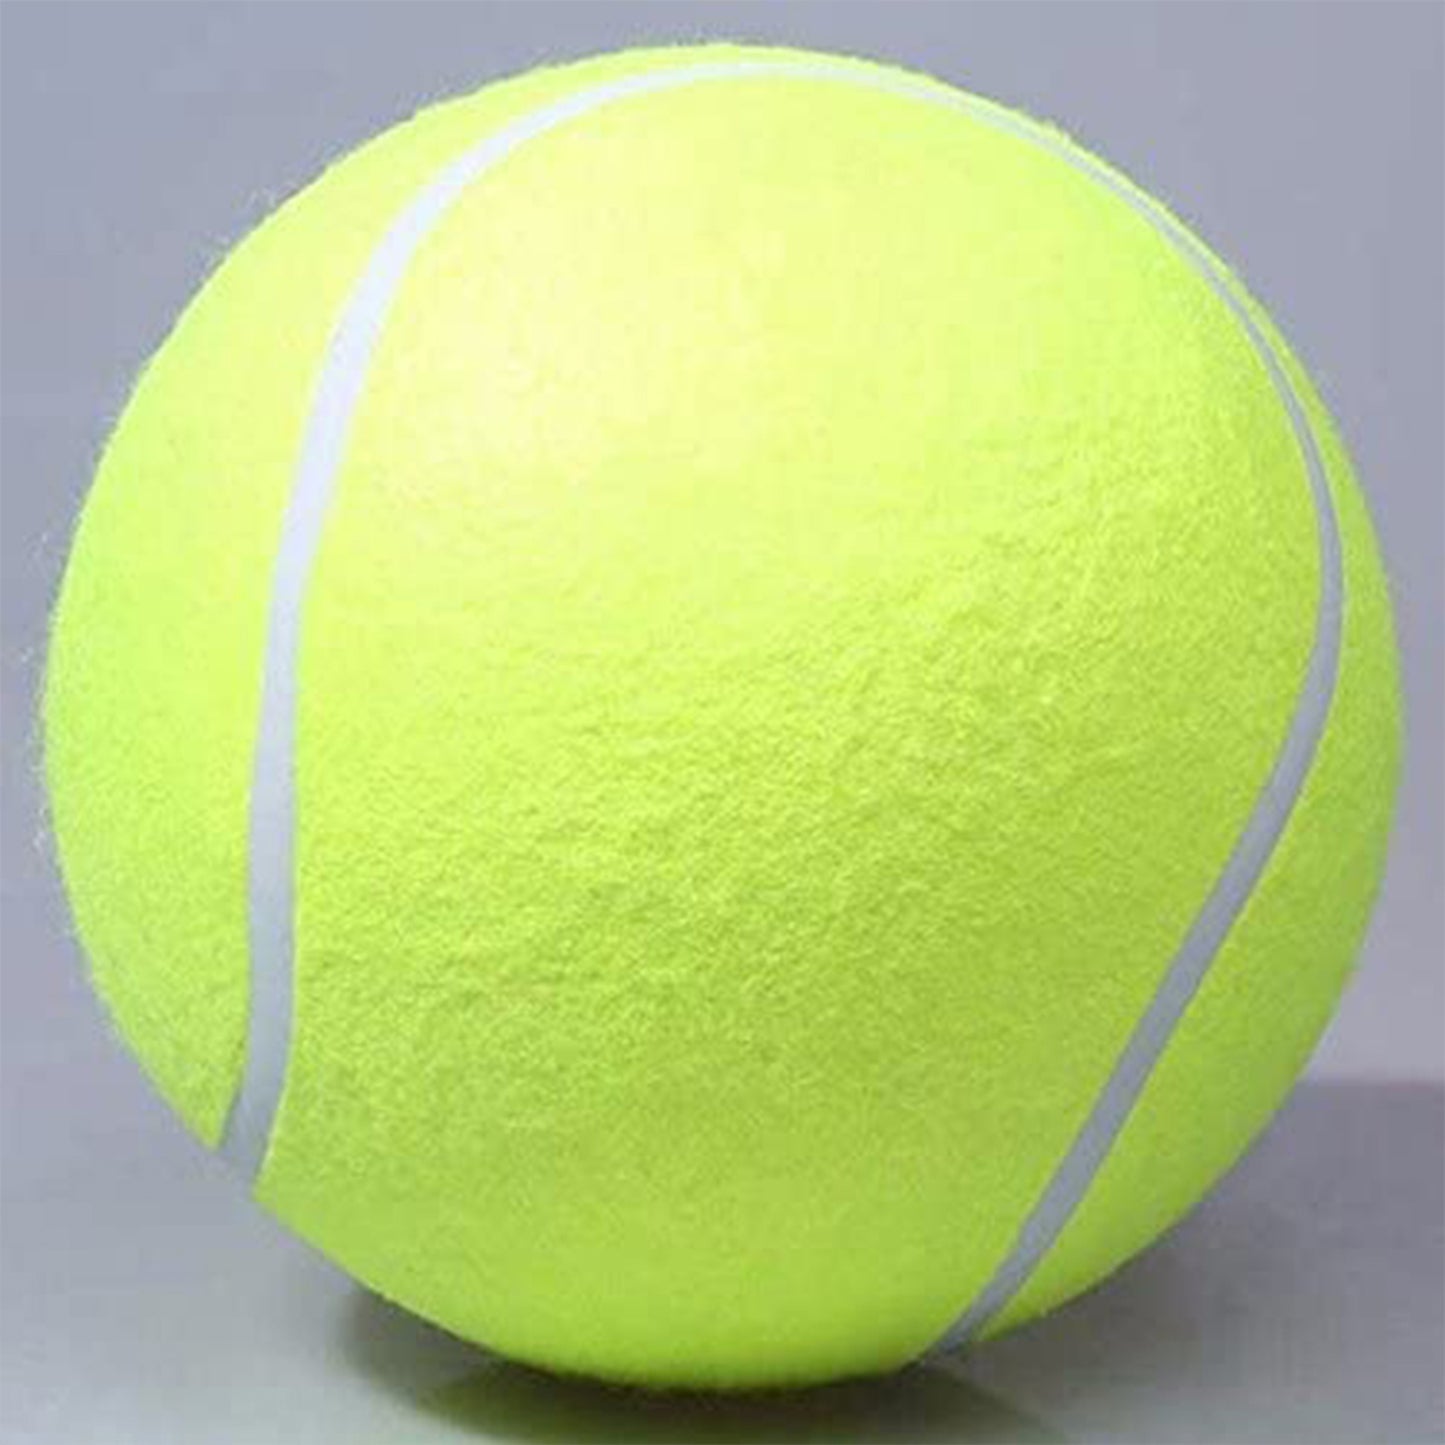 Pet Tennis Ball - 9.5" - Durable Rubber and Felt Material